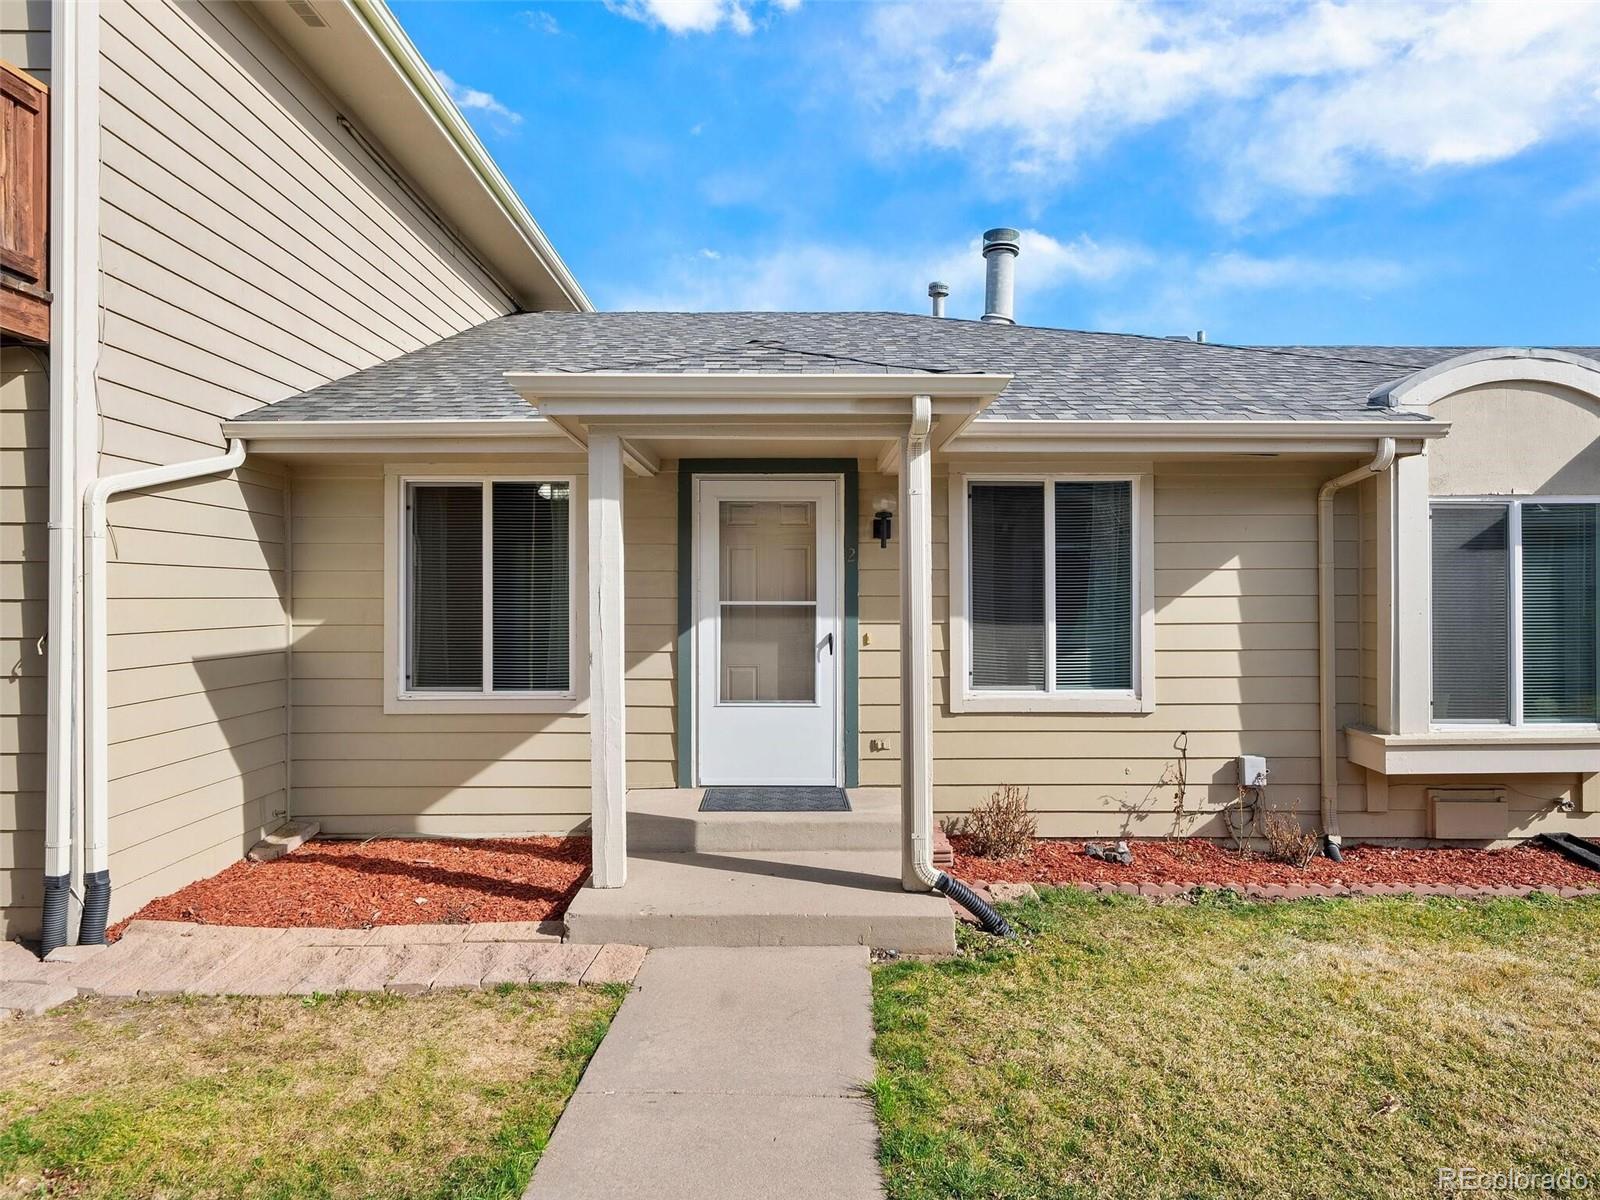 7955  york street, Denver sold home. Closed on 2024-04-05 for $335,000.